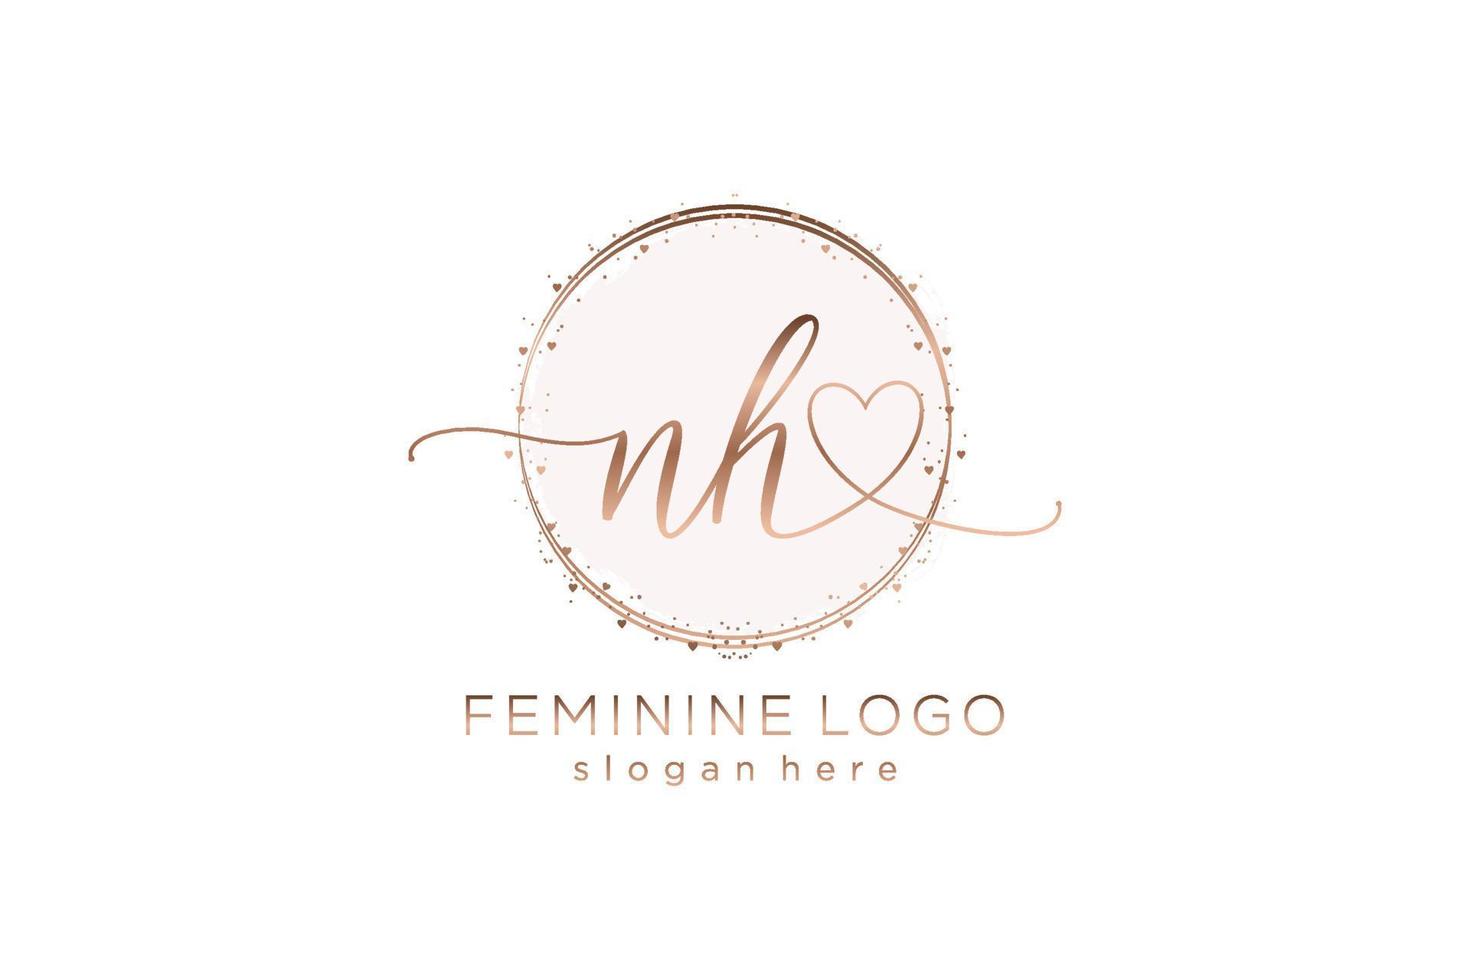 logotipo inicial de escritura a mano nh con plantilla de círculo logotipo vectorial de boda inicial, moda, floral y botánica con plantilla creativa. vector